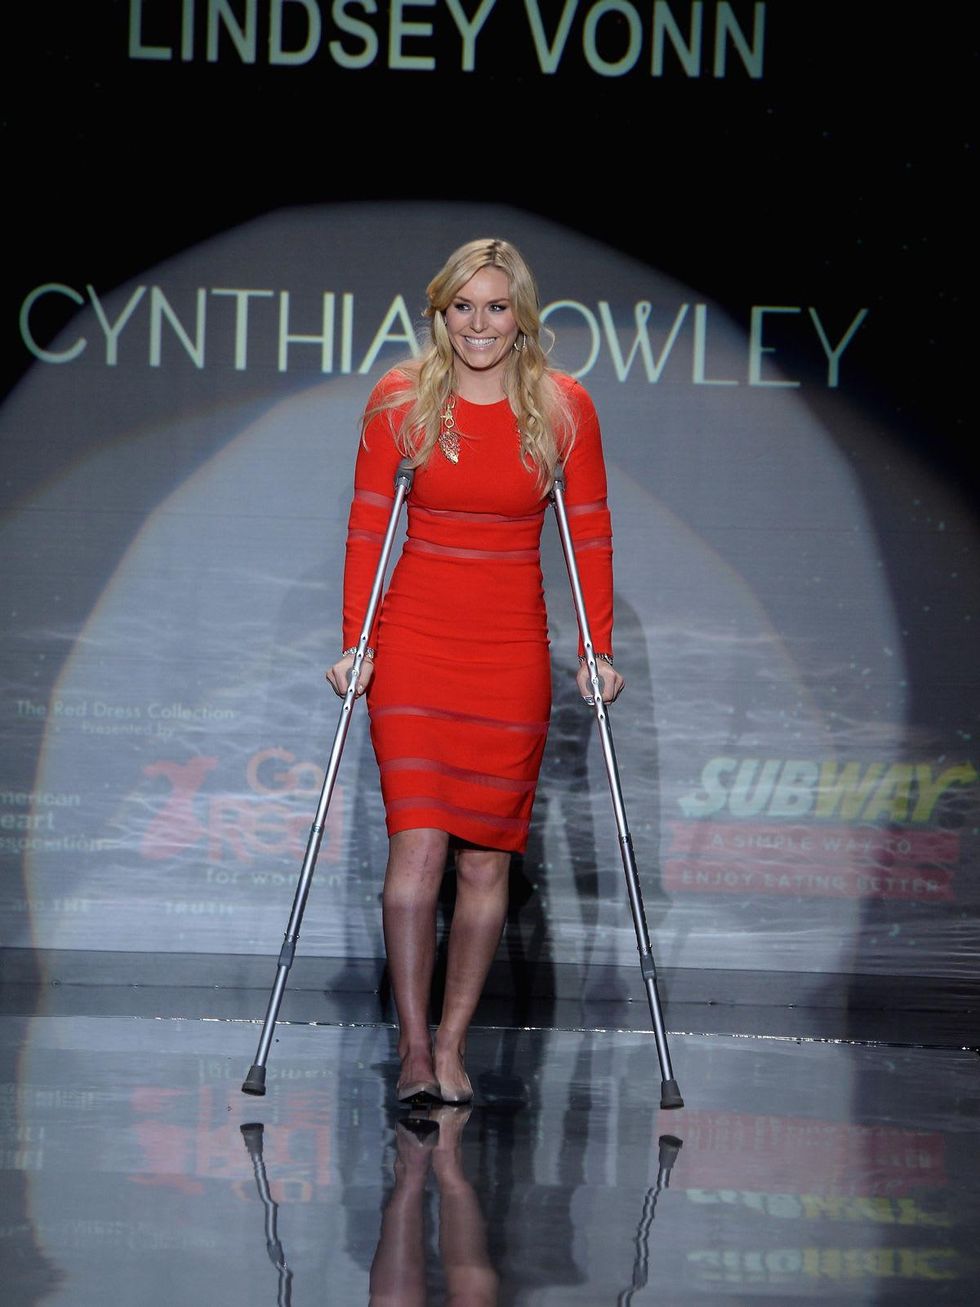 Lindsey Vonn walks the runway wearing Cynthia Rawley at Go Red For Women February 2014